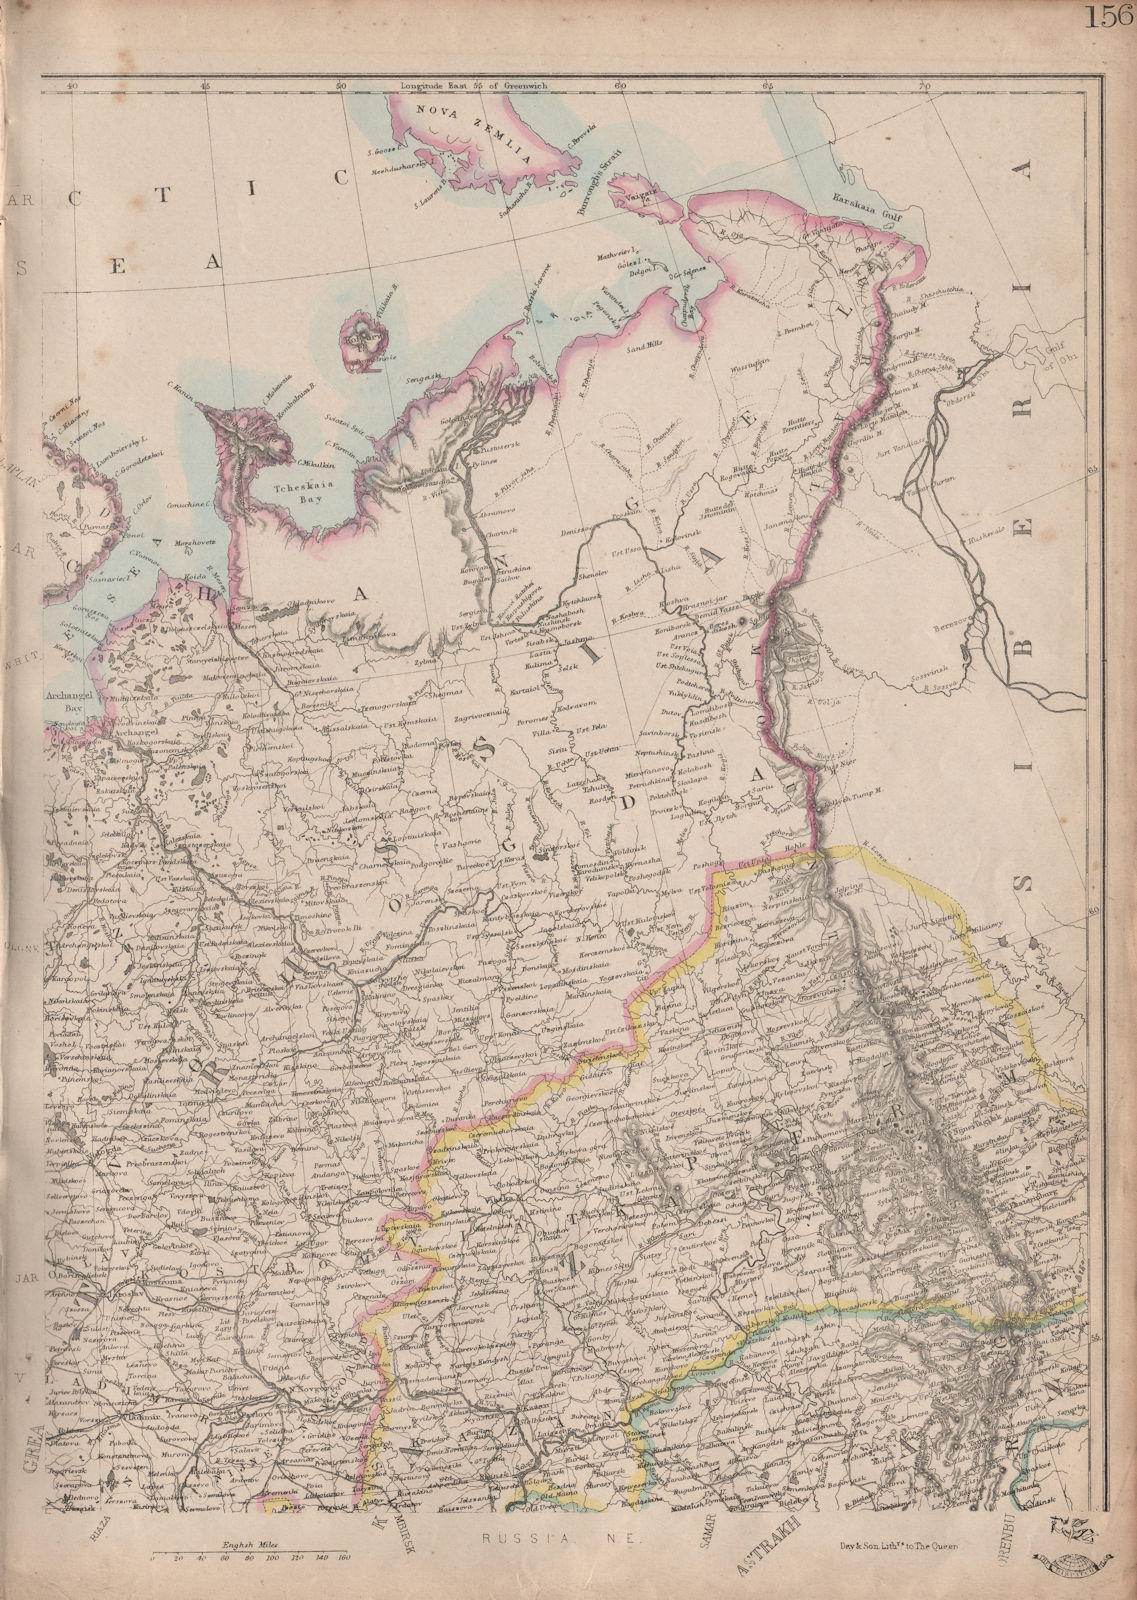 Associate Product RUSSIA IN EUROPE NE. Perm. Great Russia. JW LOWRY. Dispatch atlas 1863 old map